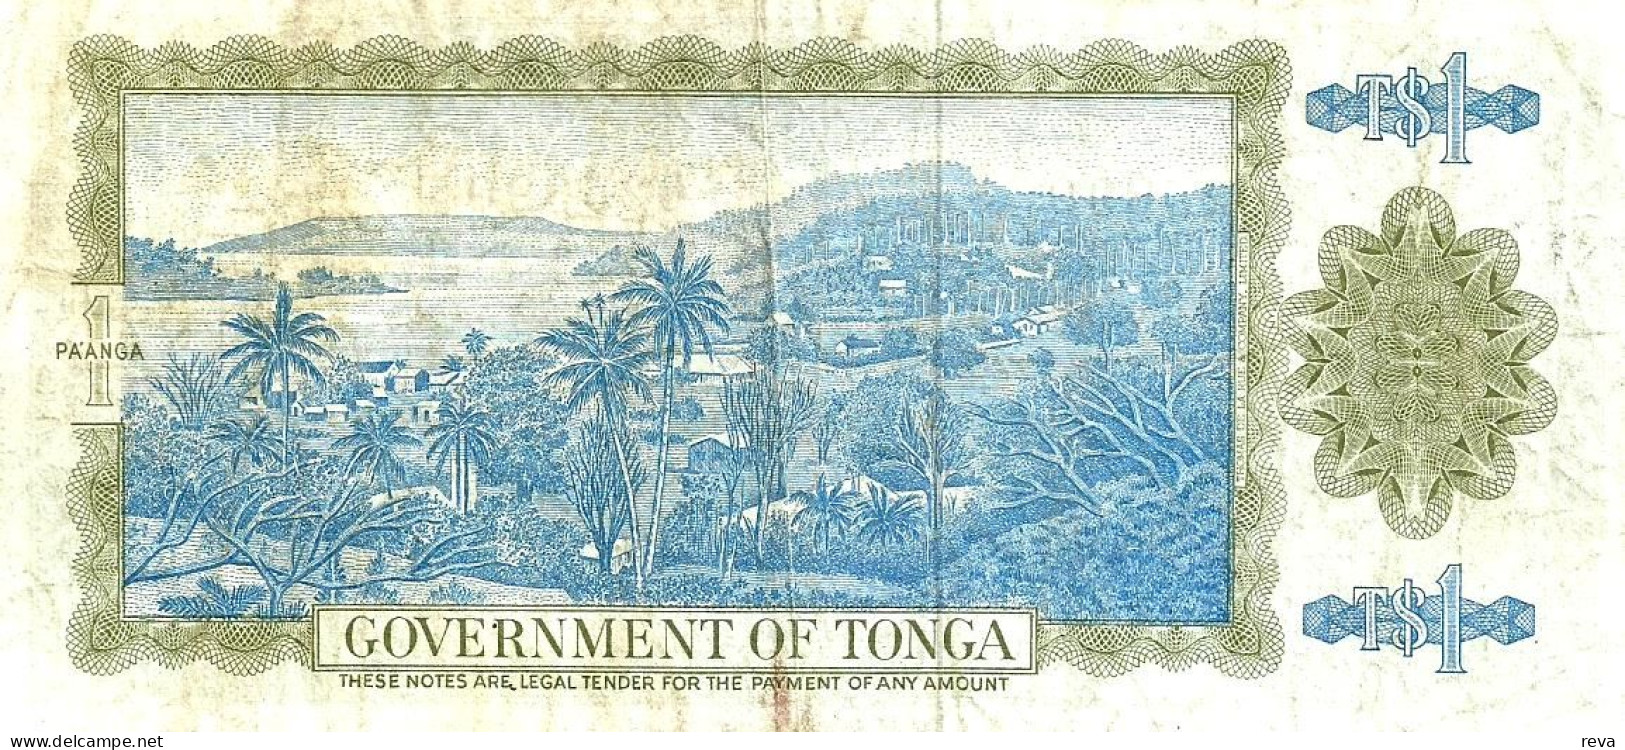 TONGA 1 PA'ANGA  GREEN KING PORTRAIT FRONT PALM TREES LANDSCAPE BACK DATED 03-06-1974 P.? VF READ DESCRIPTION - Tonga